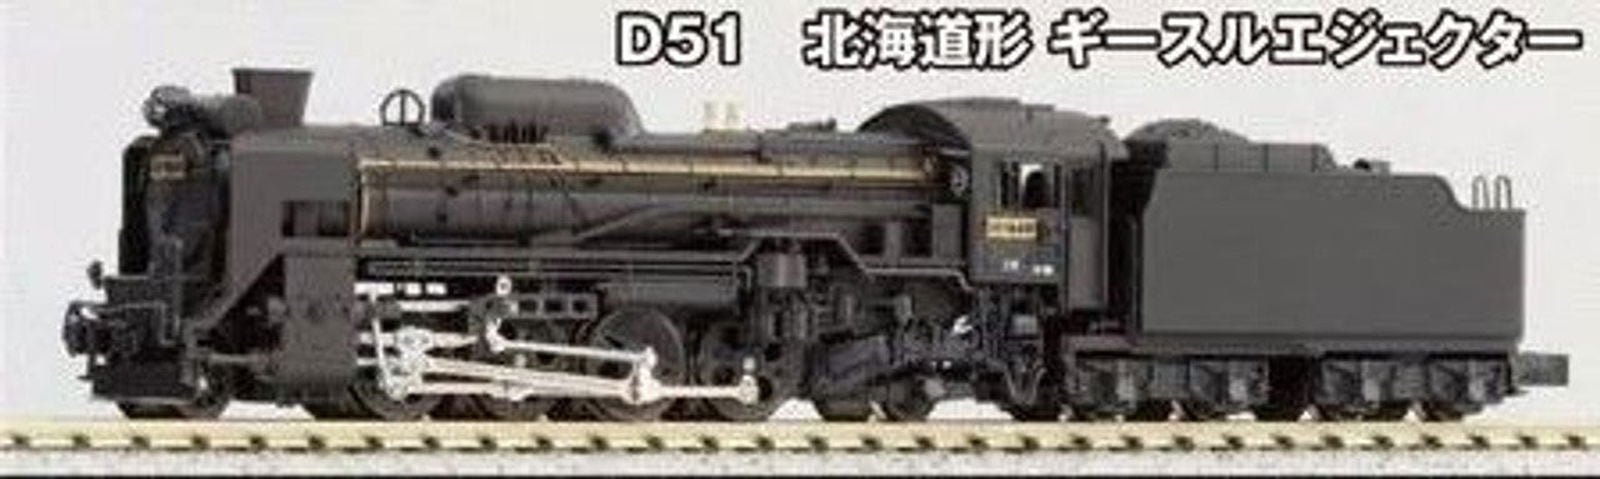 Kato 2016-C Steam Locomotive Type D51 Hokkaido Type Giesl Ejector (N scale) - BanzaiHobby